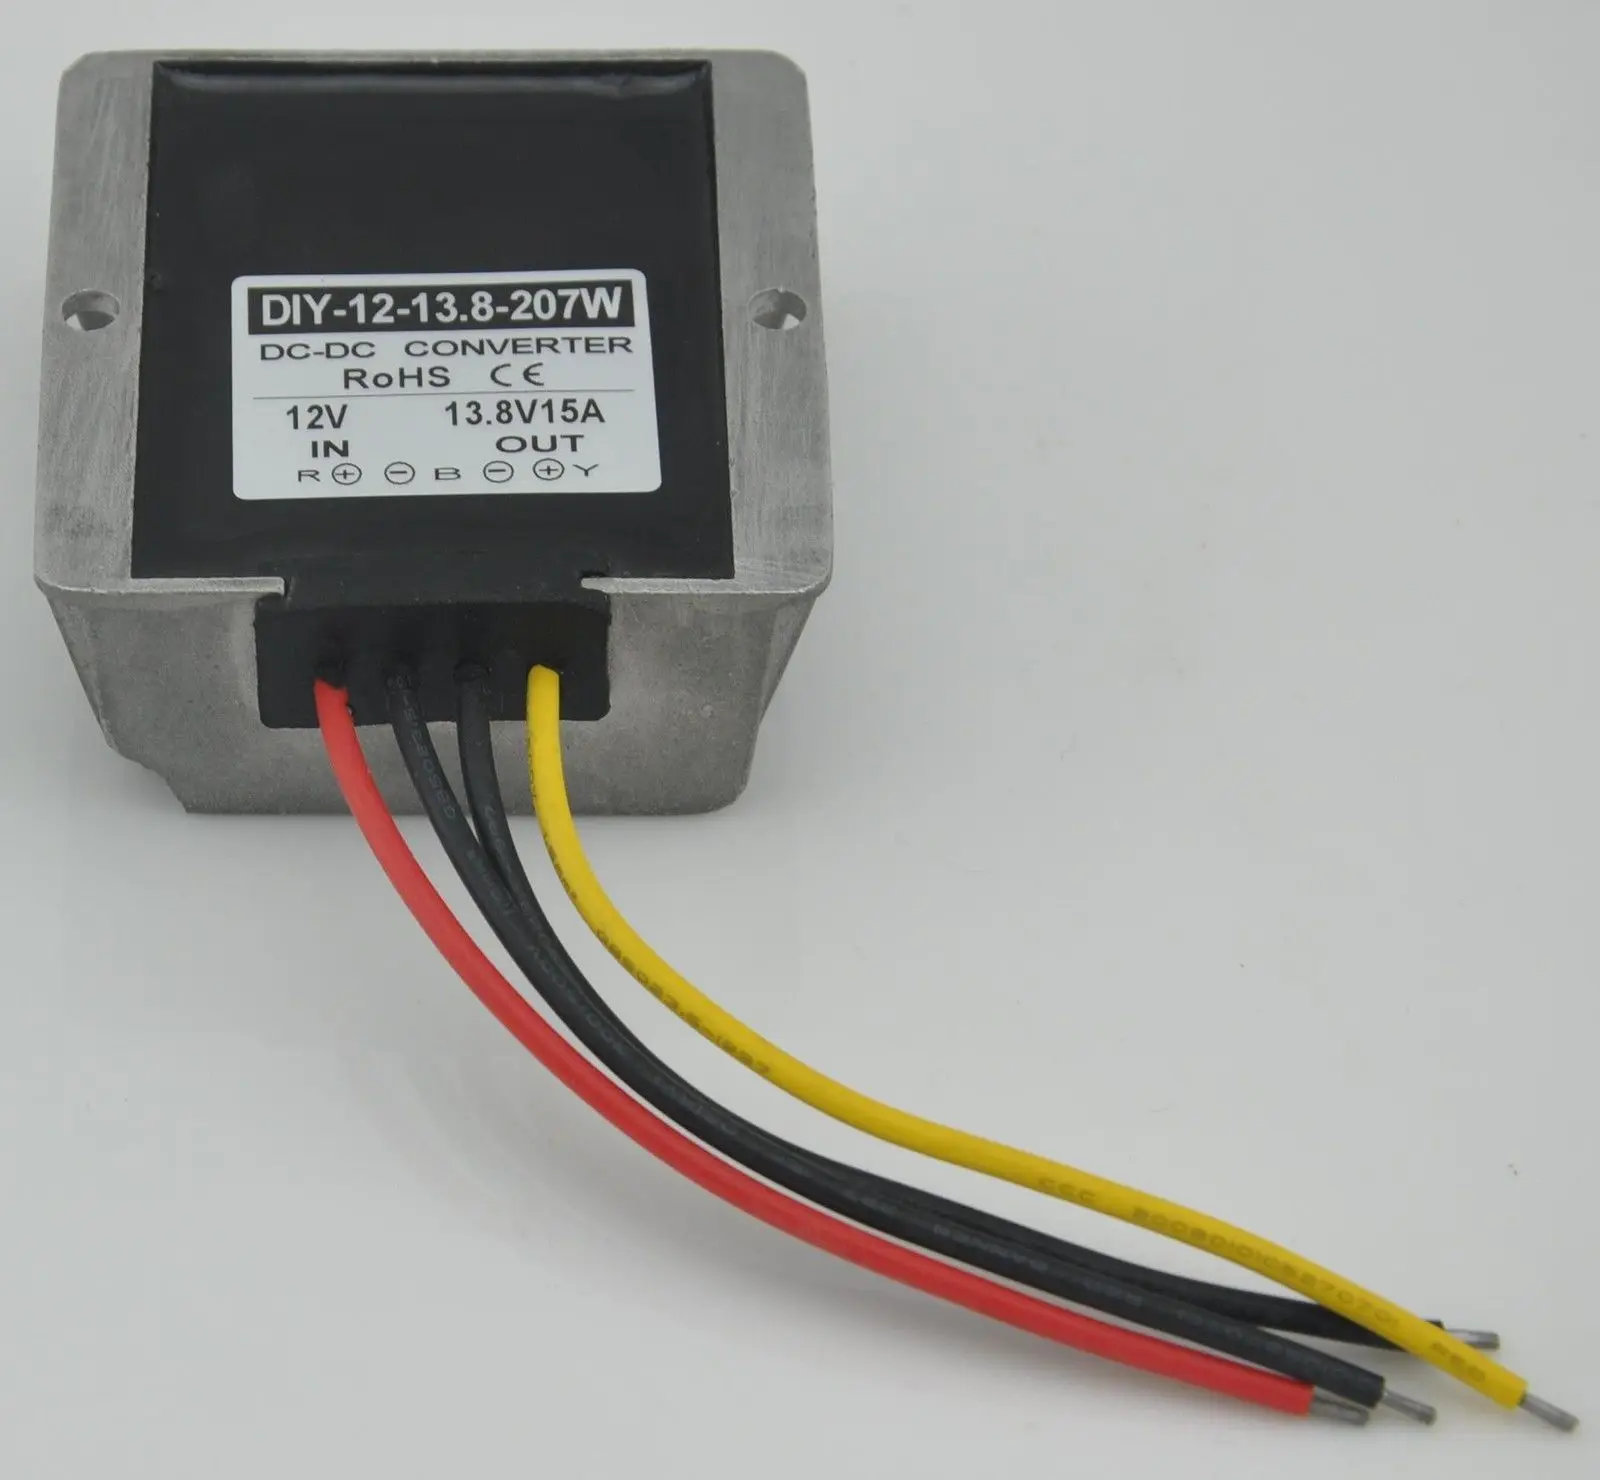 NEW Voltage Booster Power DC Converter Step Up Regulator 12V to 13.8V 15A 207W